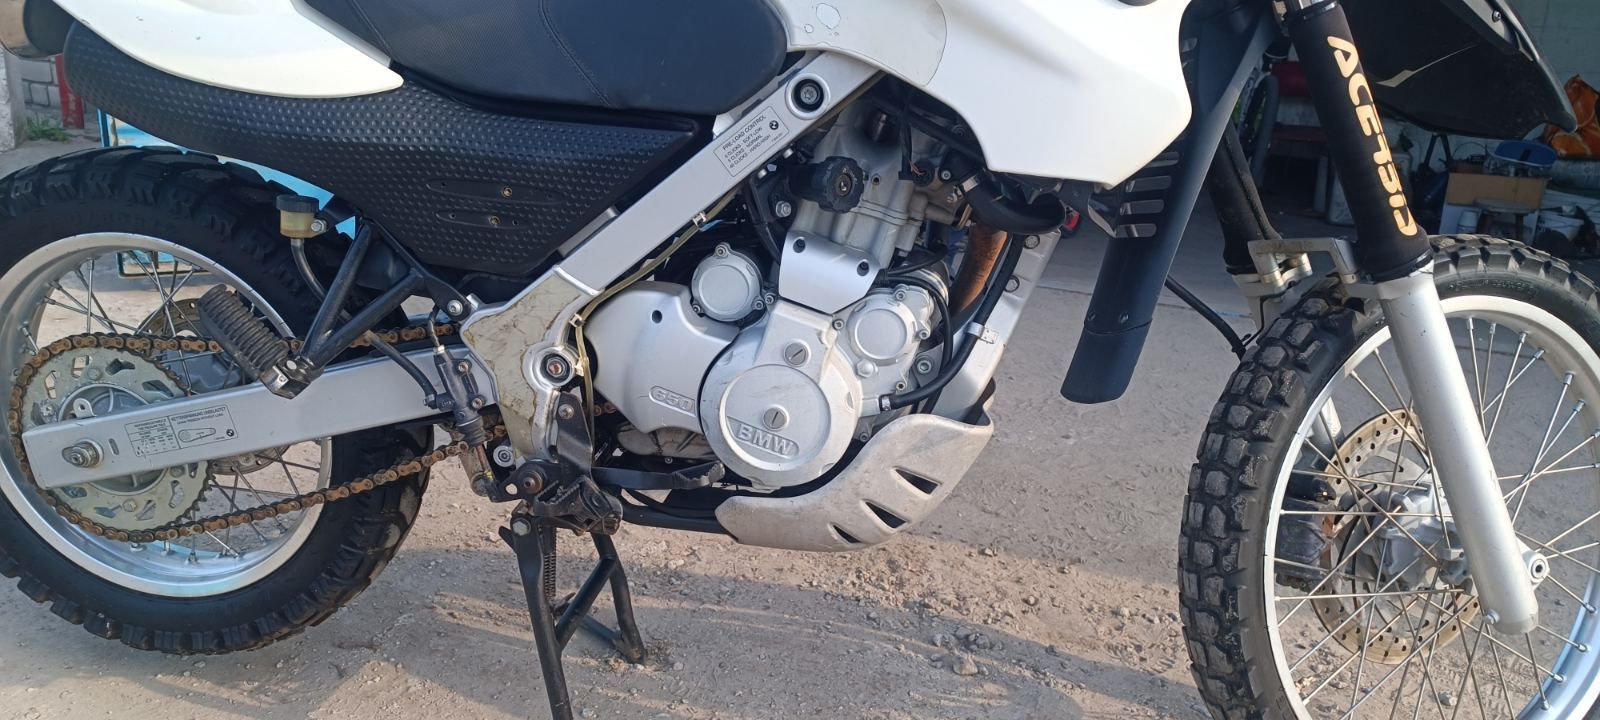 Мотоцикл BMW F650GS Dakar (GS, гусь, херусь)